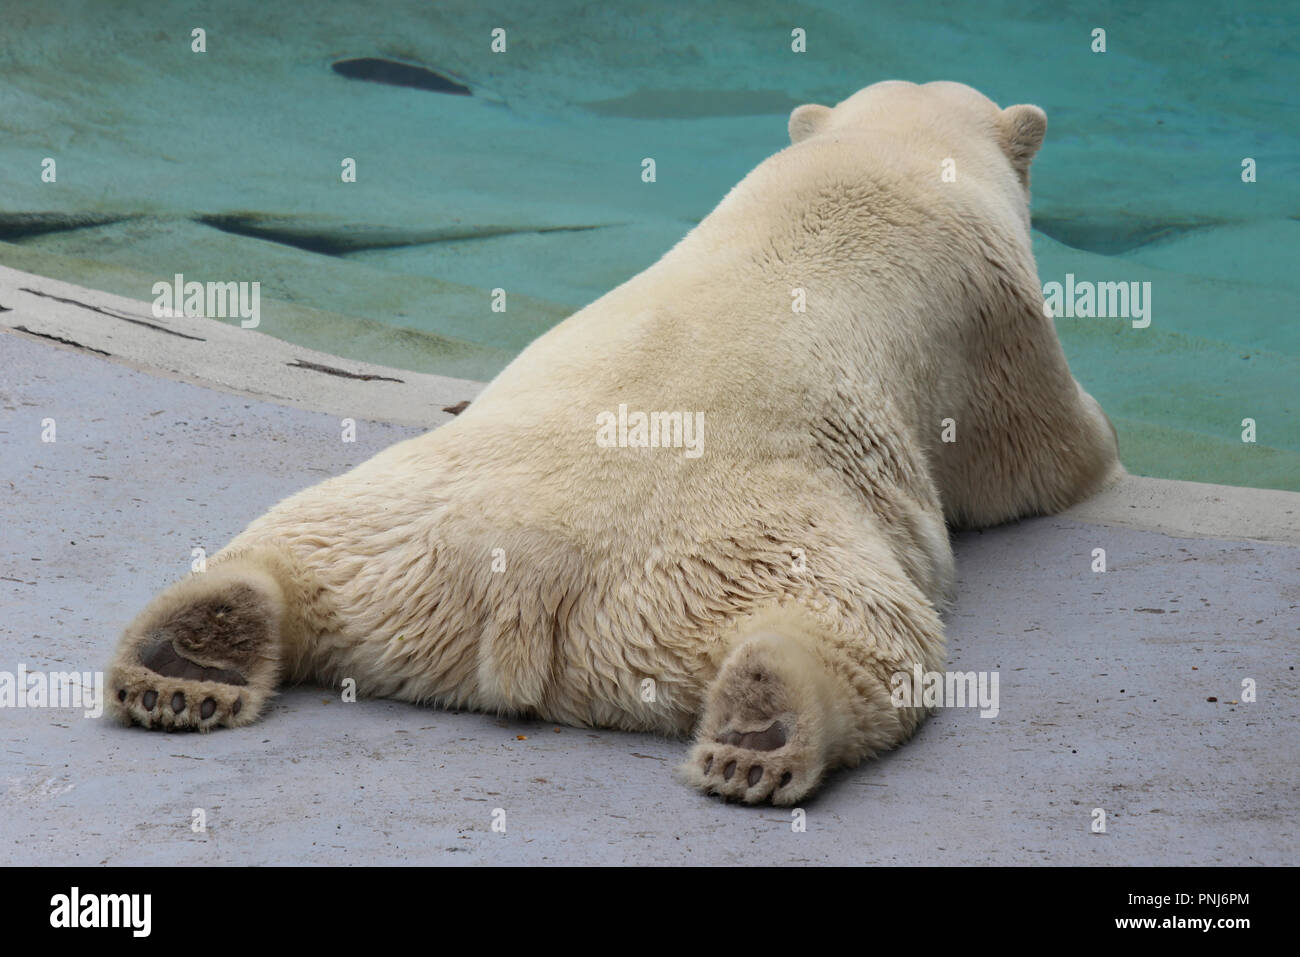 Orso polare pigramente sdraiato sulla sua pancia, Acquario du Québec, Canada Foto Stock